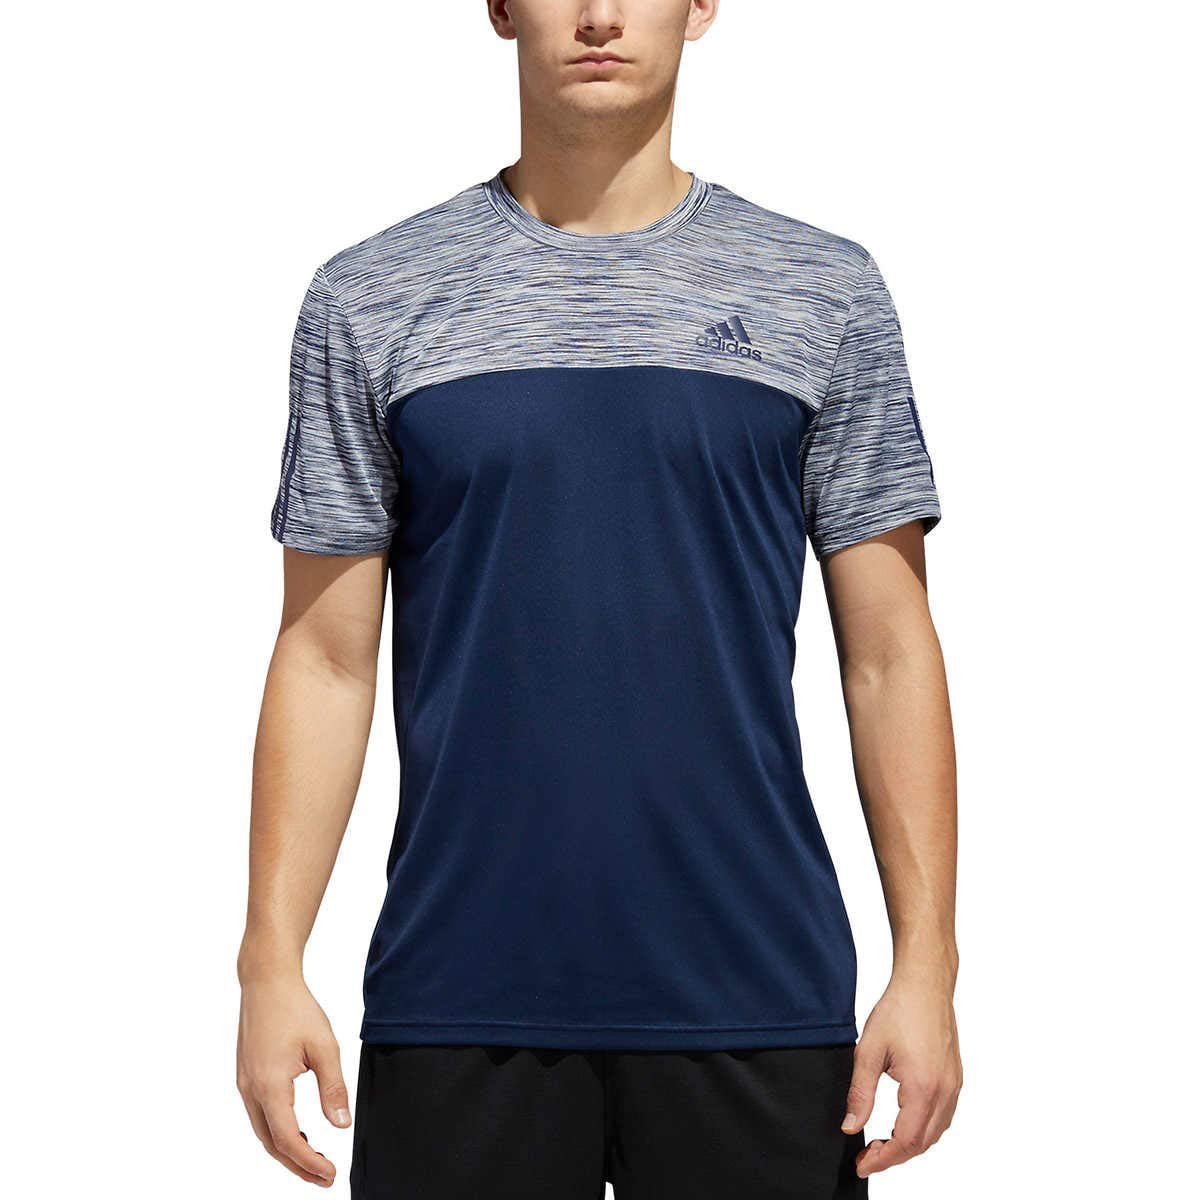 ADIDAS Men's Crew neck Short sleeved ACTIVE Tee shirt - Walmart.com